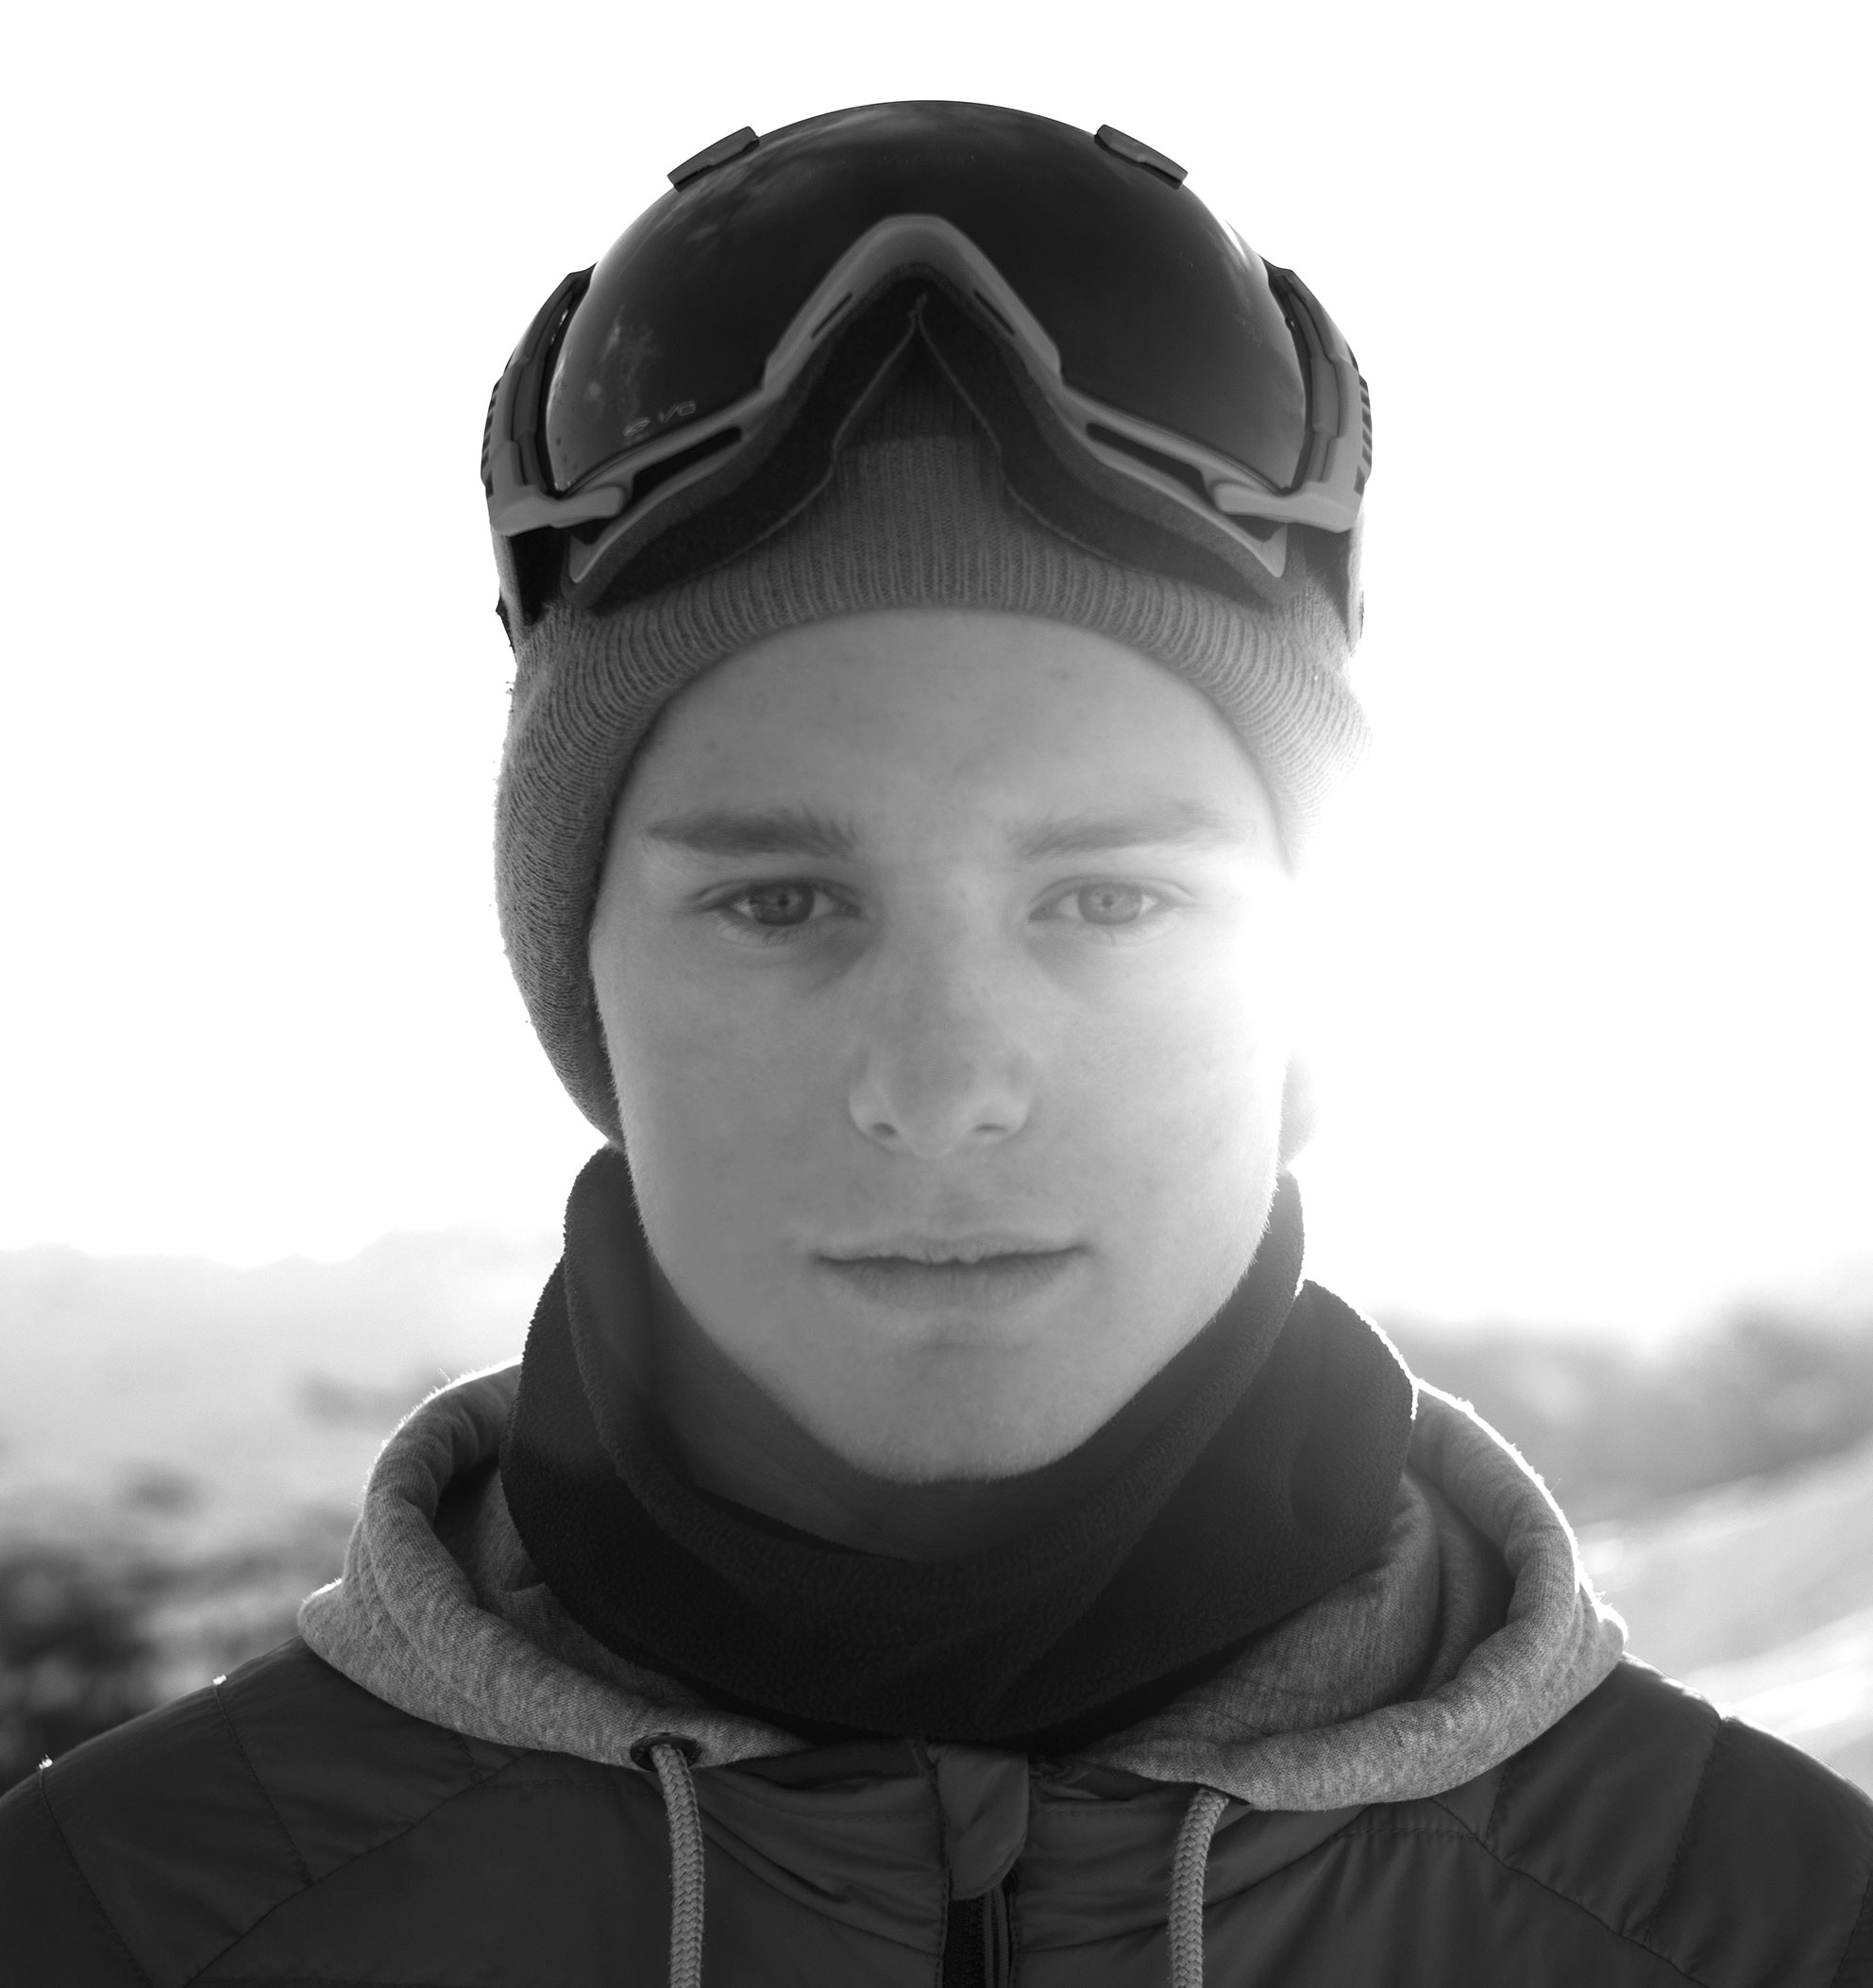 Prime-Snowboarding-Magazine-Rookies-<b>Lucien-Koch</b> - Prime-Snowboarding-Magazine-Rookies-Lucien-Koch